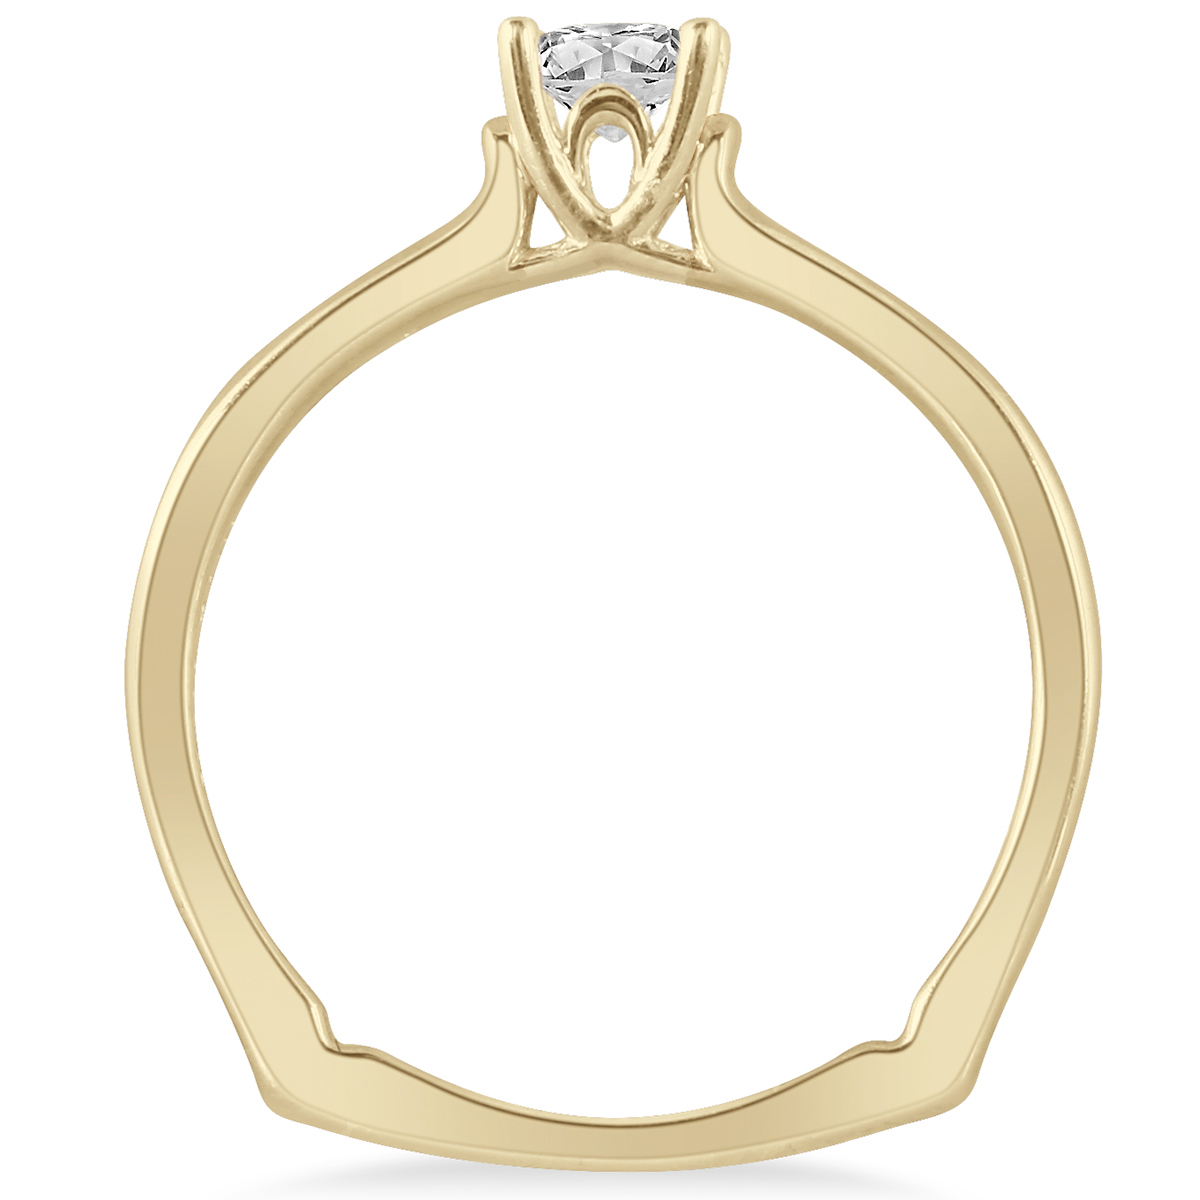 szul.com 1/3 Carat TW Princess Cut Diamond Ring in 14K Yellow Gold